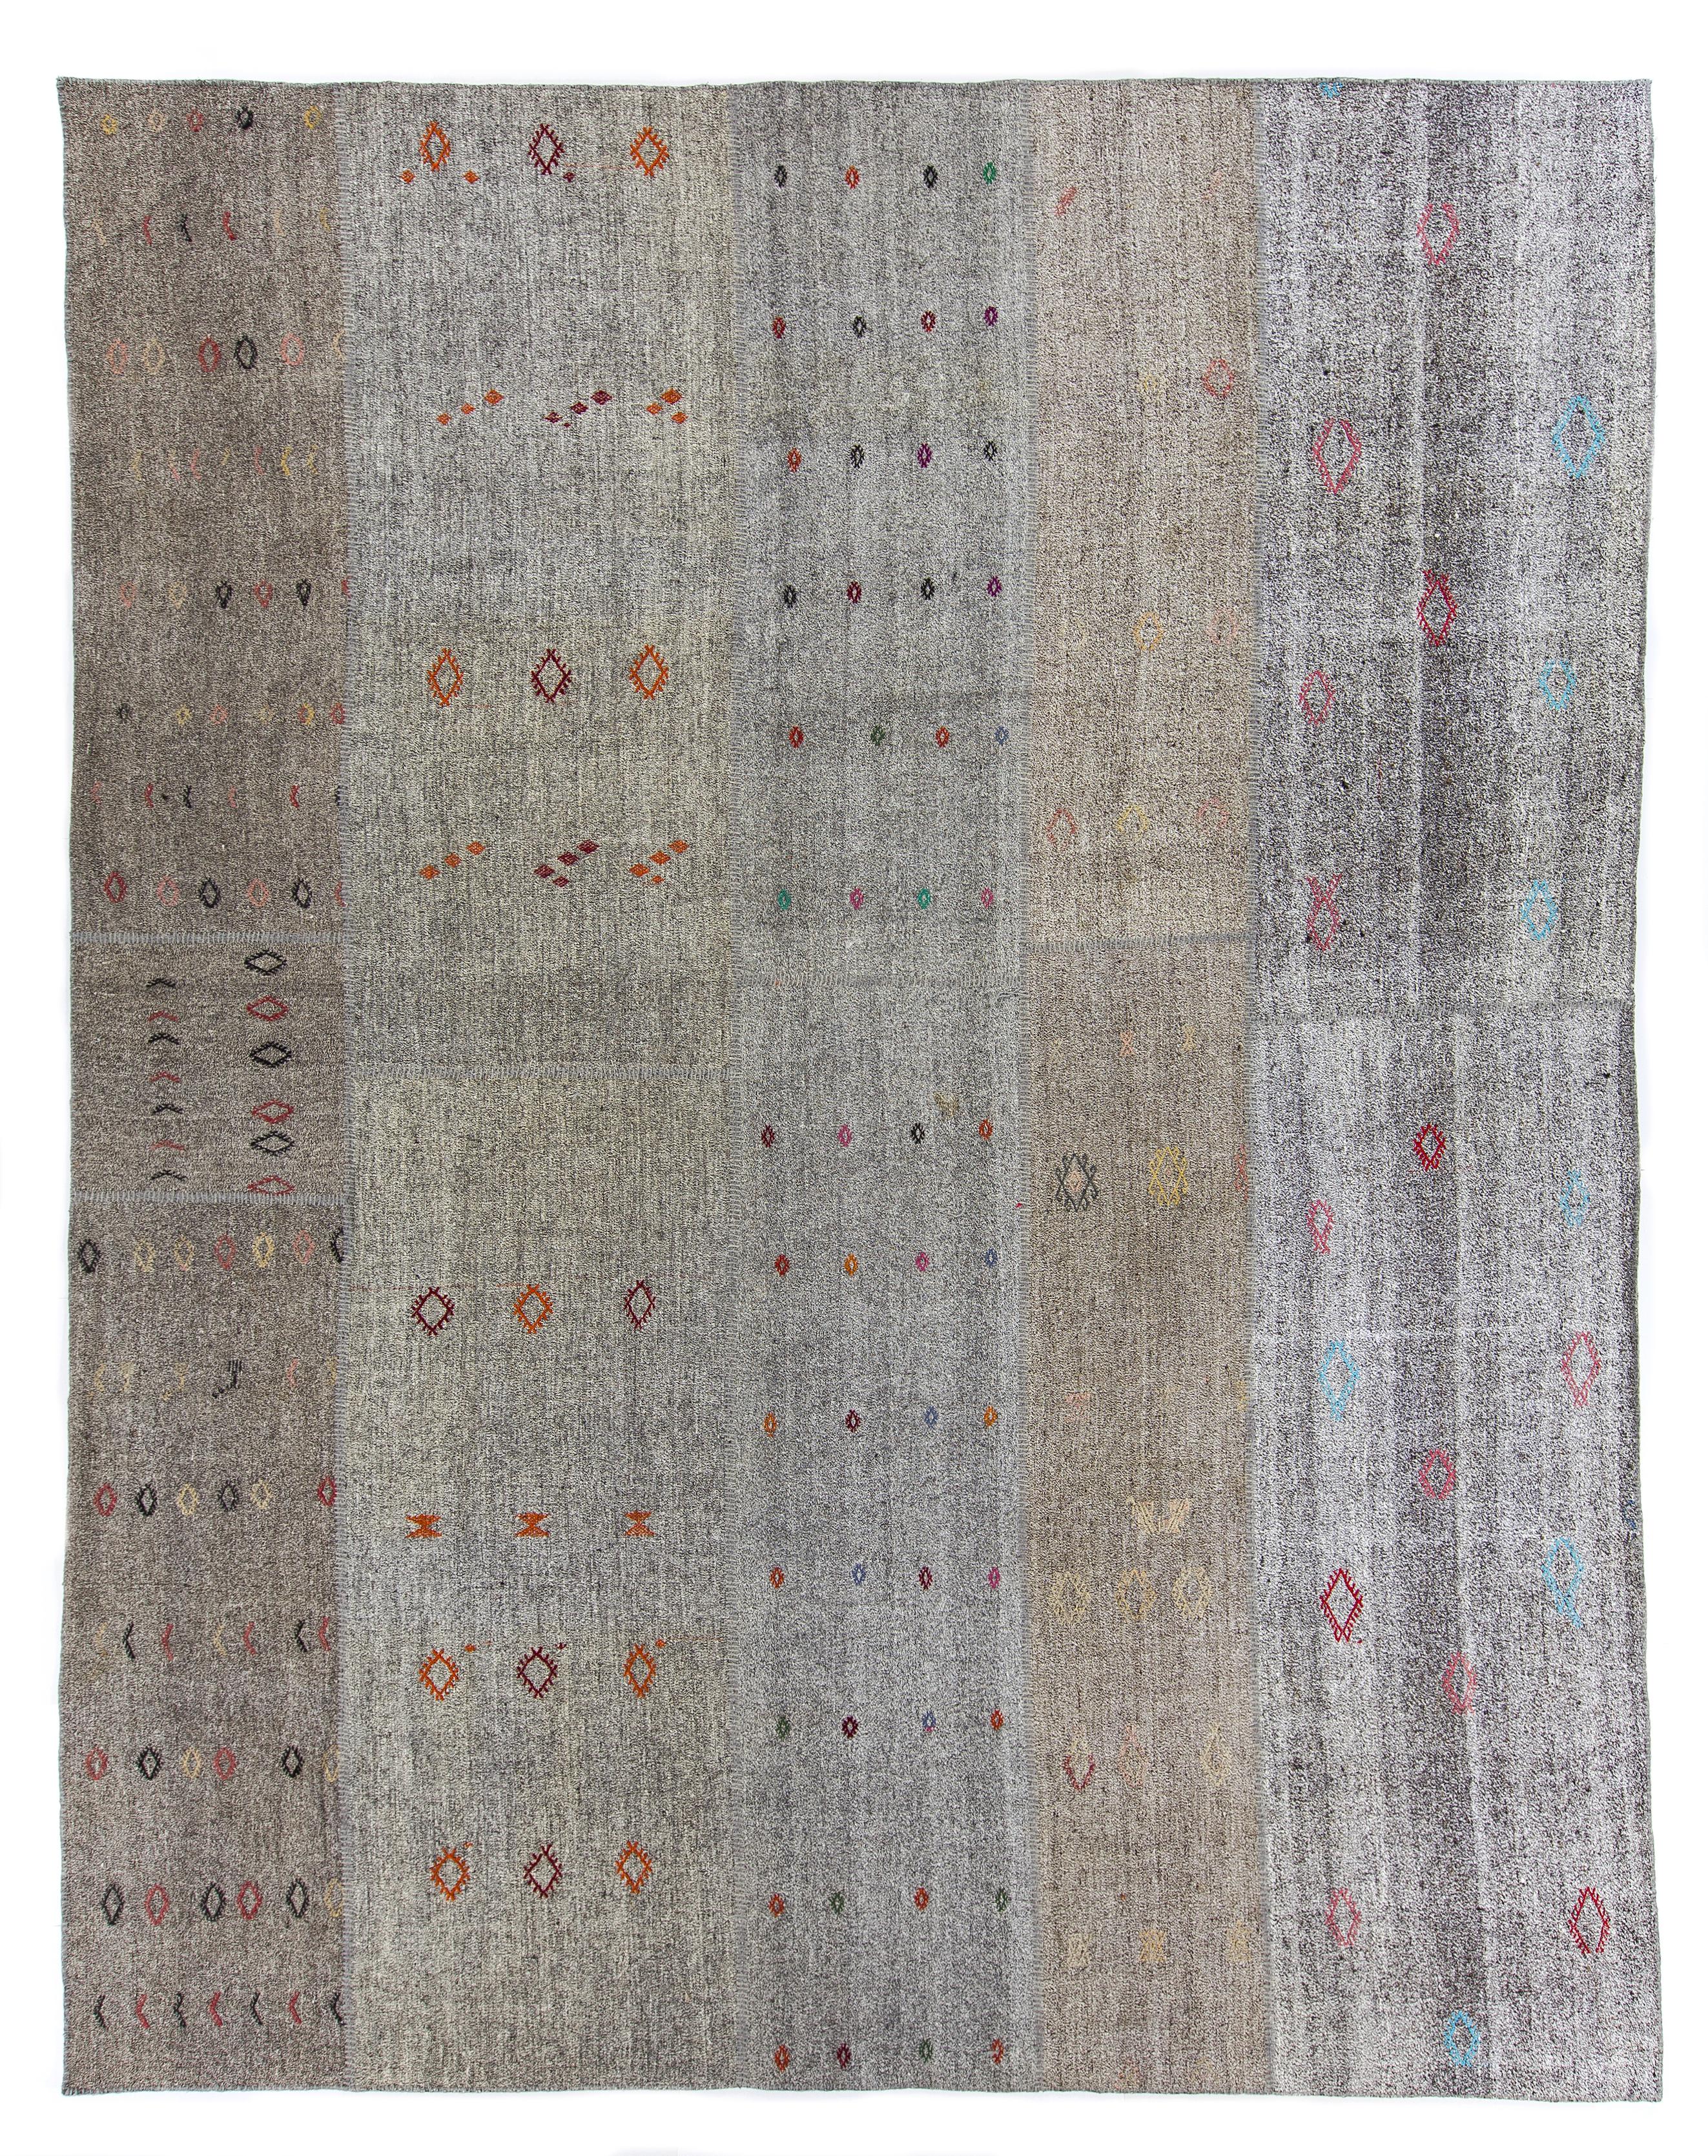 Late 20th Century Hand-Woven Vintage Anatolian Kilim Rug, Flat-Weave Floor Covering